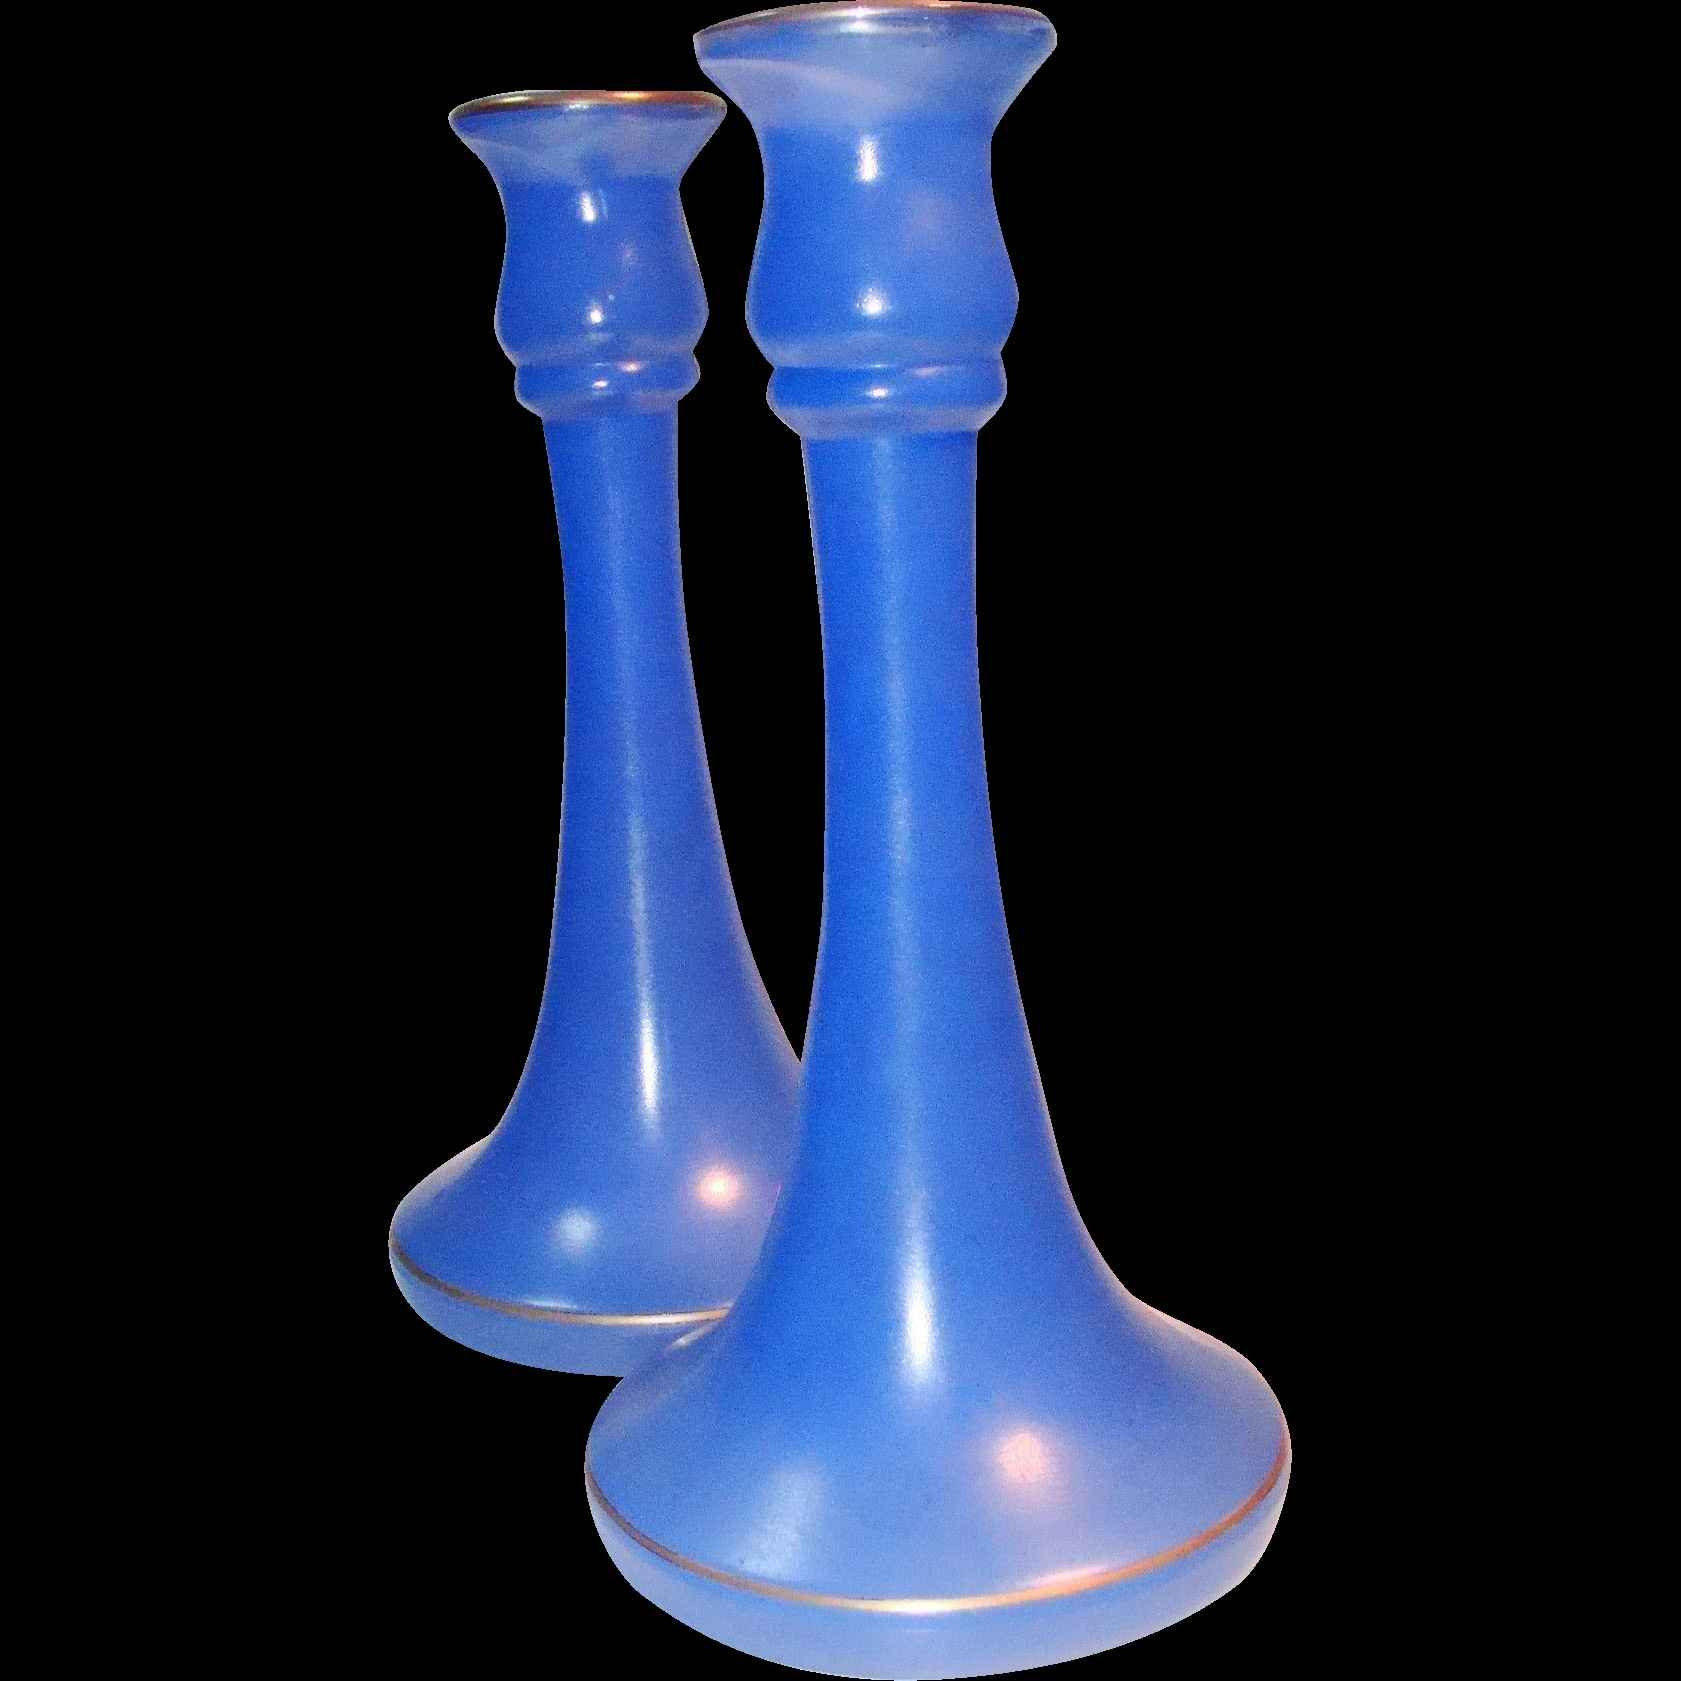 blue bud vases wholesale of 37 fenton blue glass vase the weekly world inside 37 fenton blue glass vase